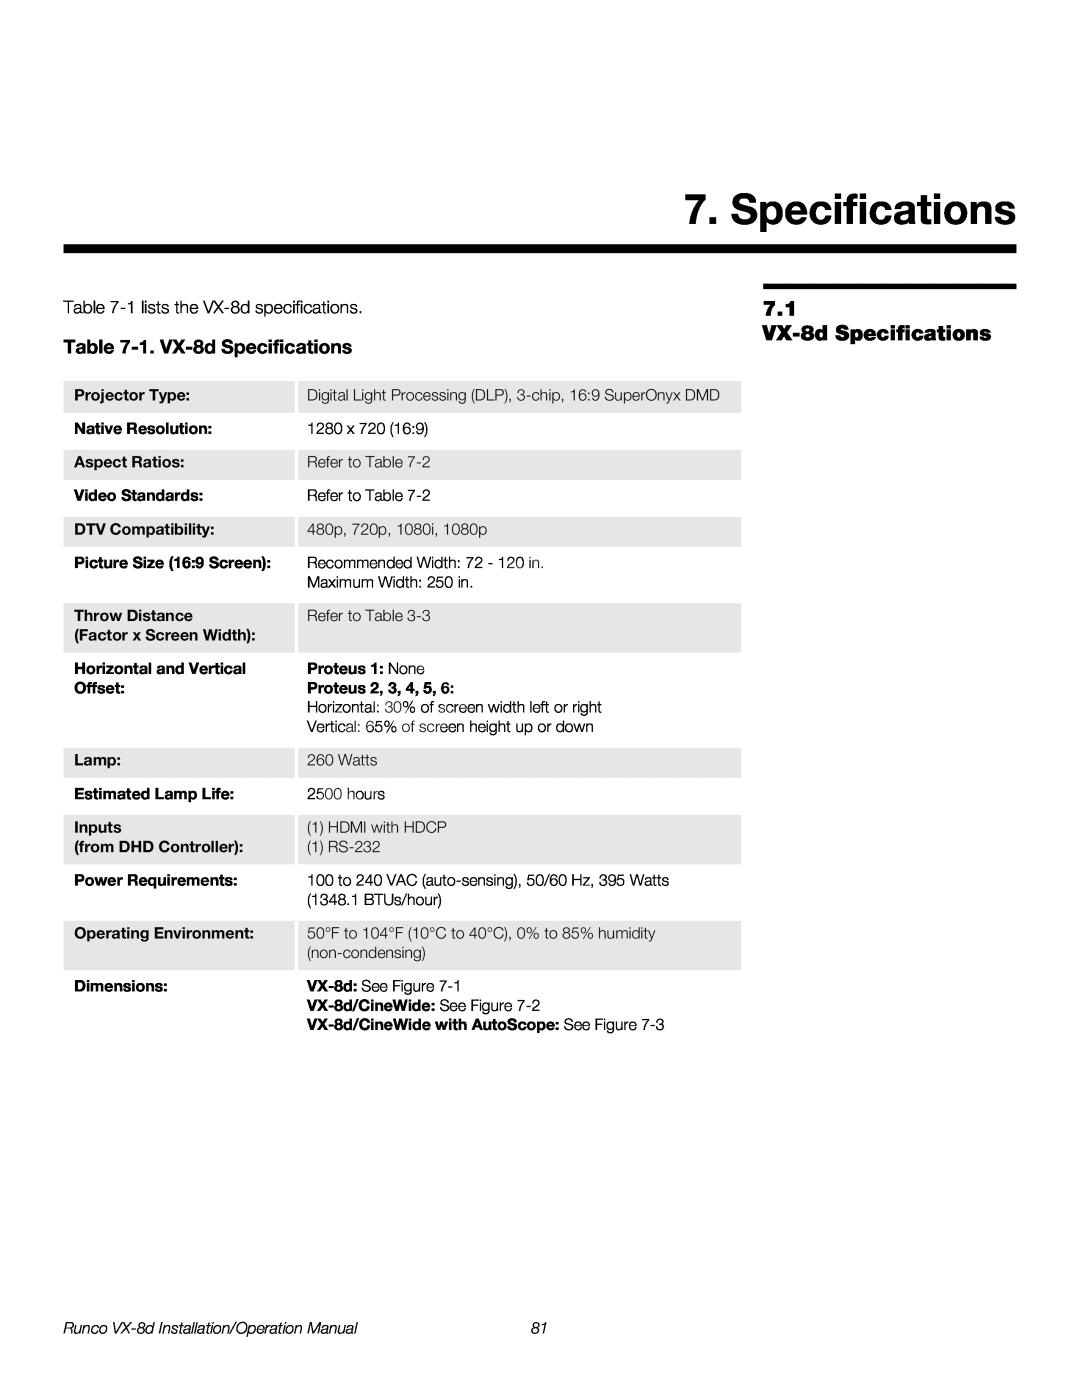 Runco VX-8D 1. VX-8d Specifications, Projector Type, Native Resolution, Aspect Ratios, Video Standards, Offset 